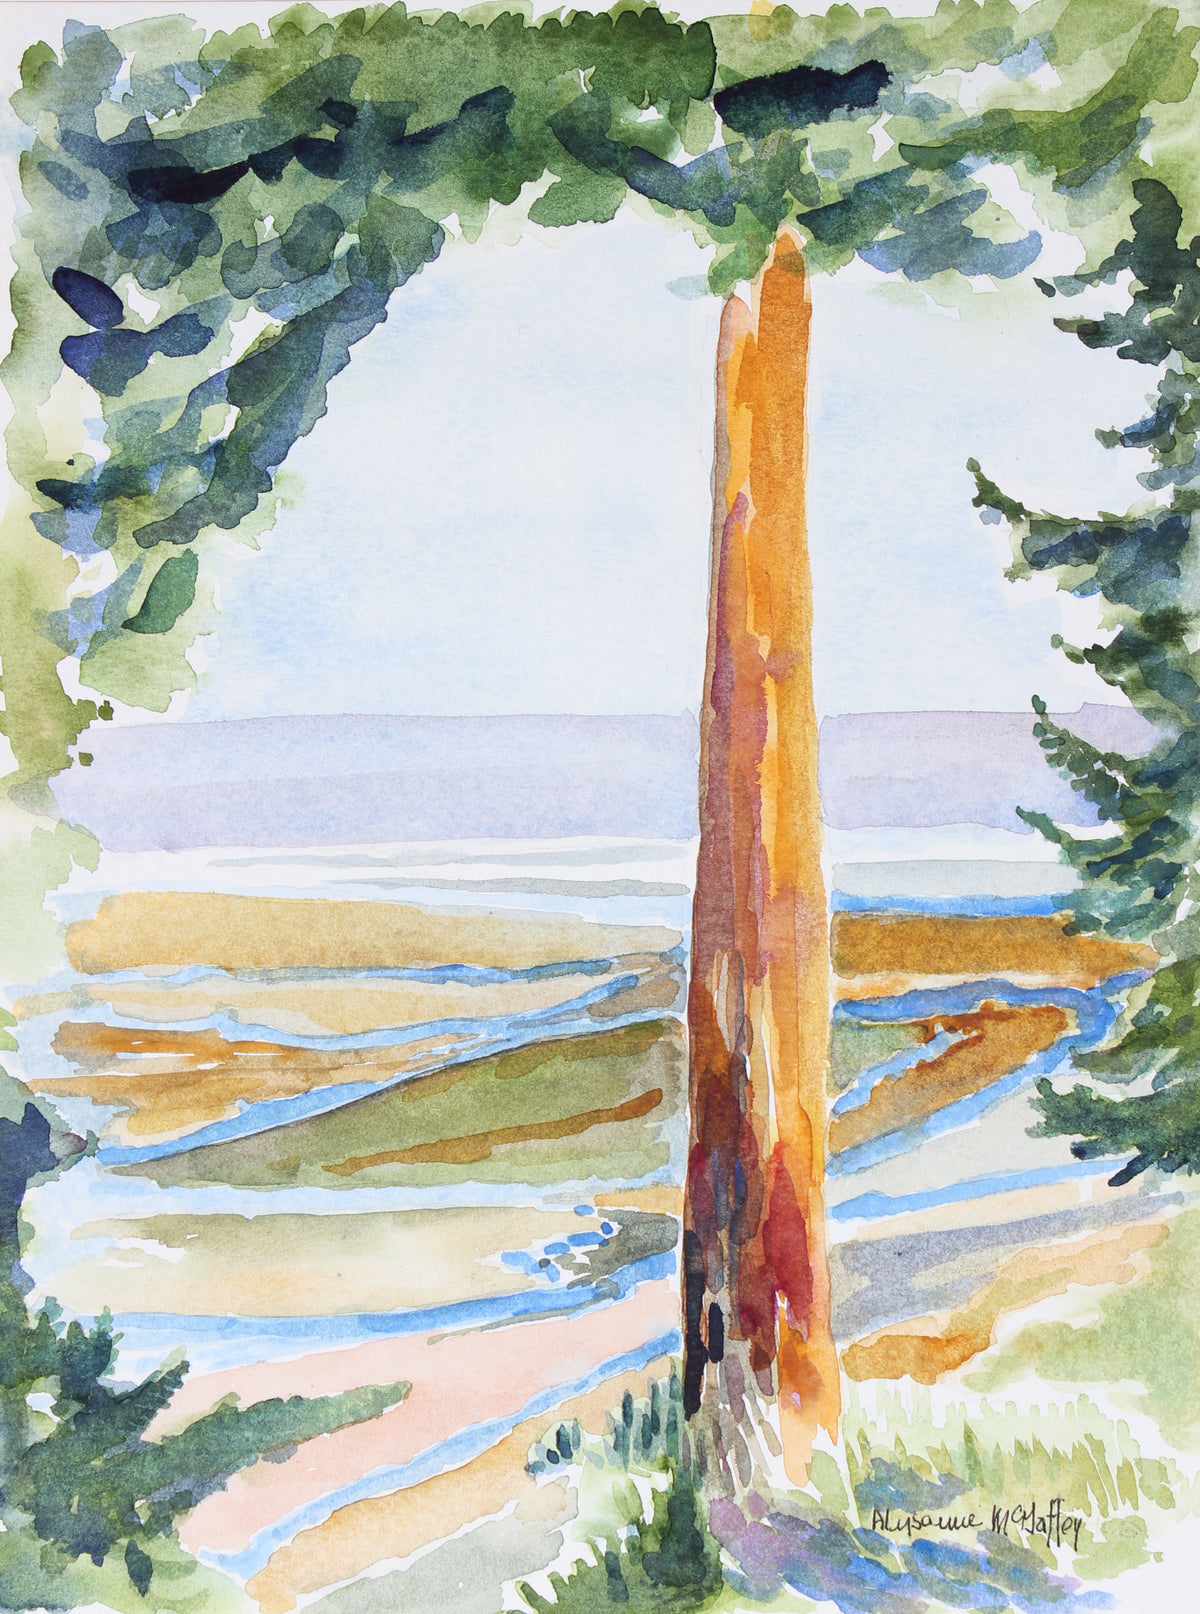 &lt;I&gt;Looking Down on Skagit River Flats&lt;/I&gt; &lt;br&gt;20th Century Watercolor&lt;br&gt;&lt;br&gt;#43898